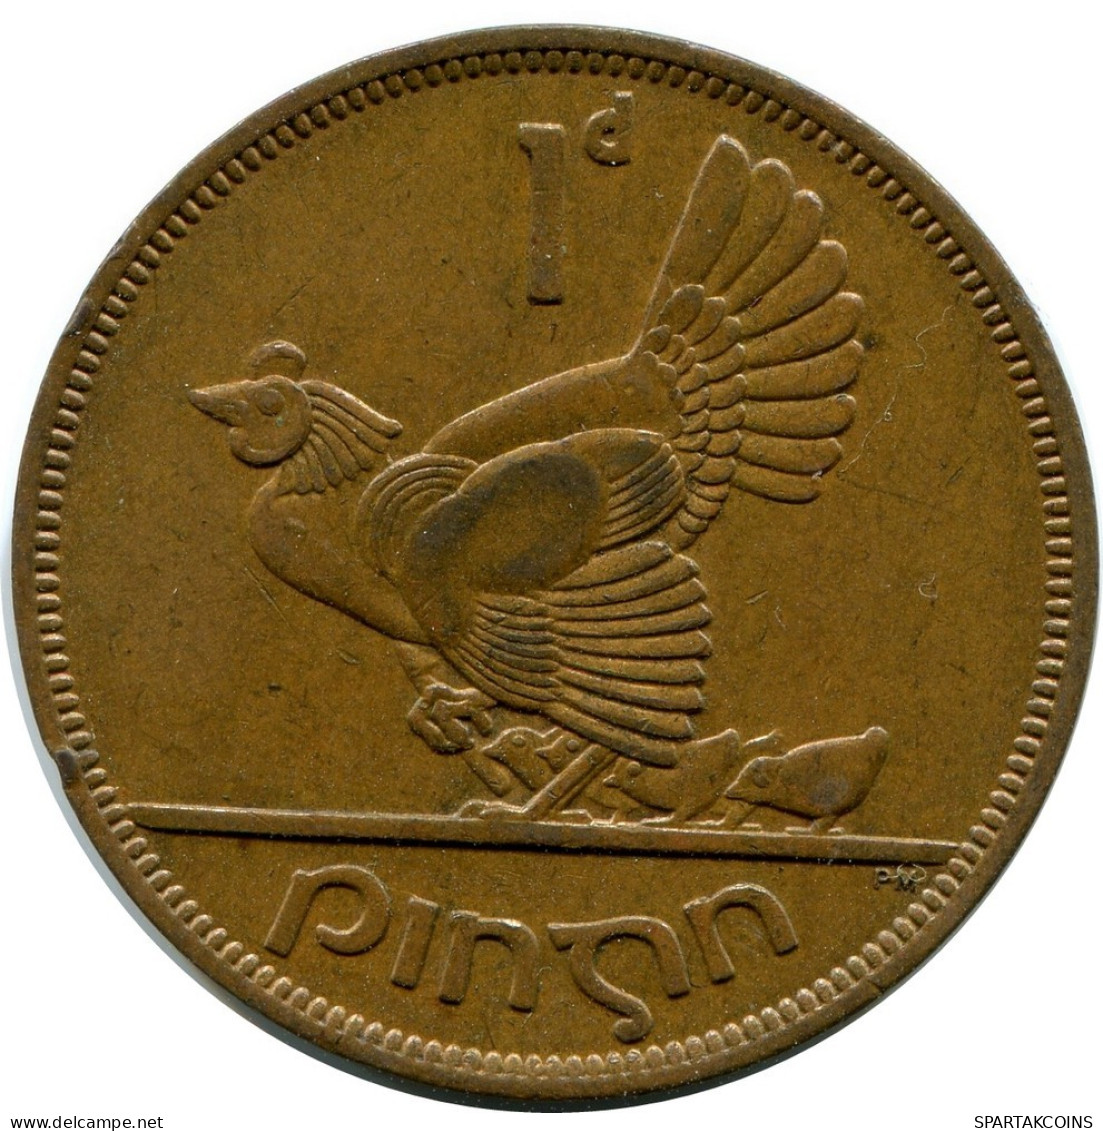 1 PENNY 1964 IRLANDA IRELAND Moneda #AY660.E.A - Ierland